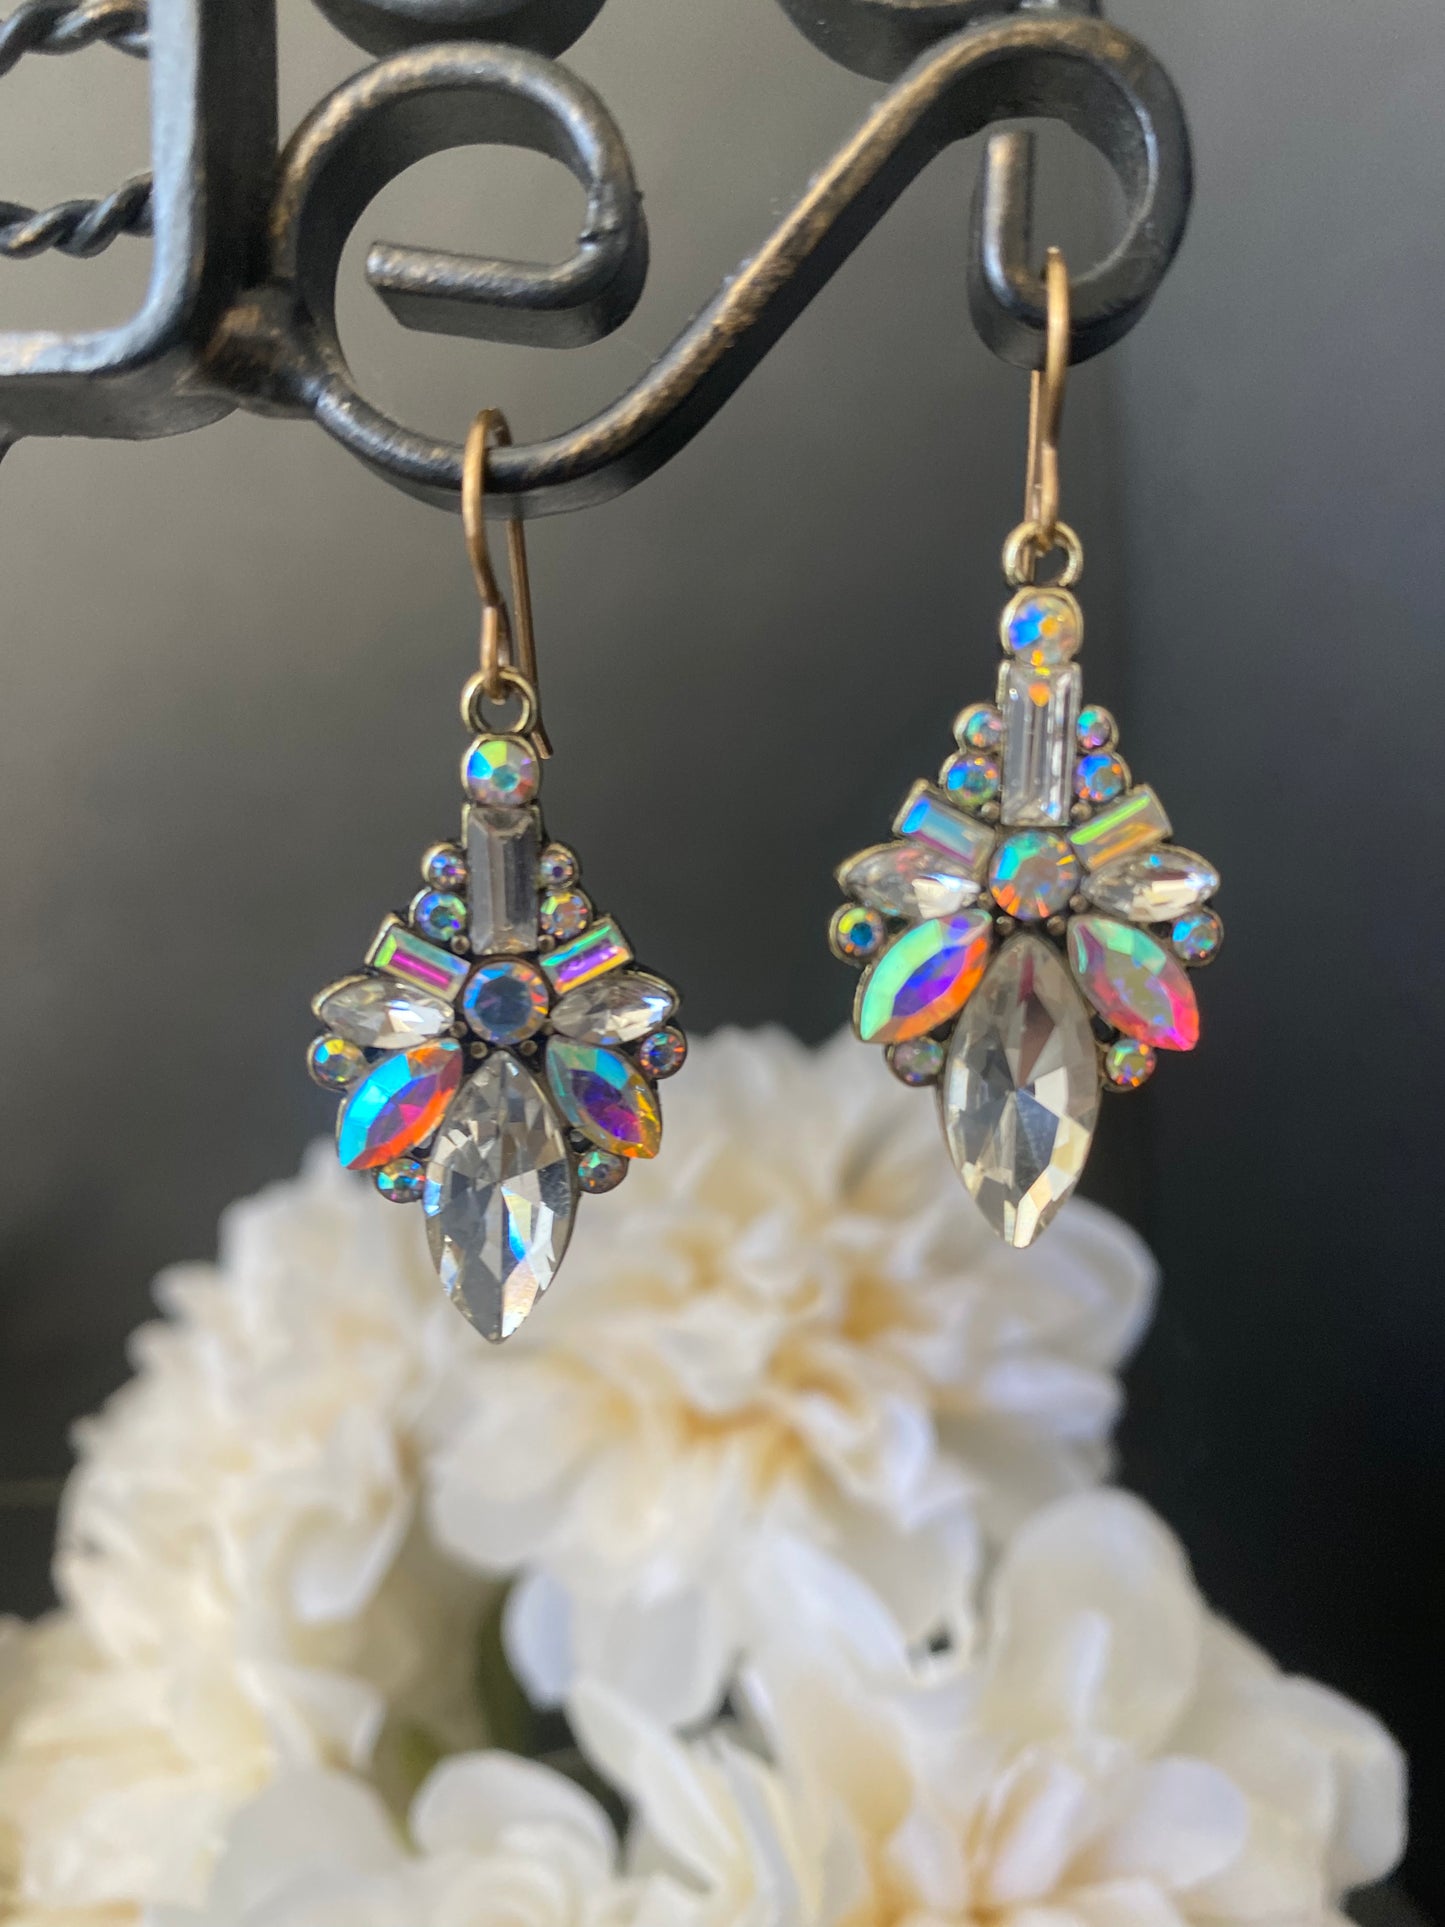 Crystal art deco charms, bronze metal, earrings, jewelry. - Andria Bieber Designs 